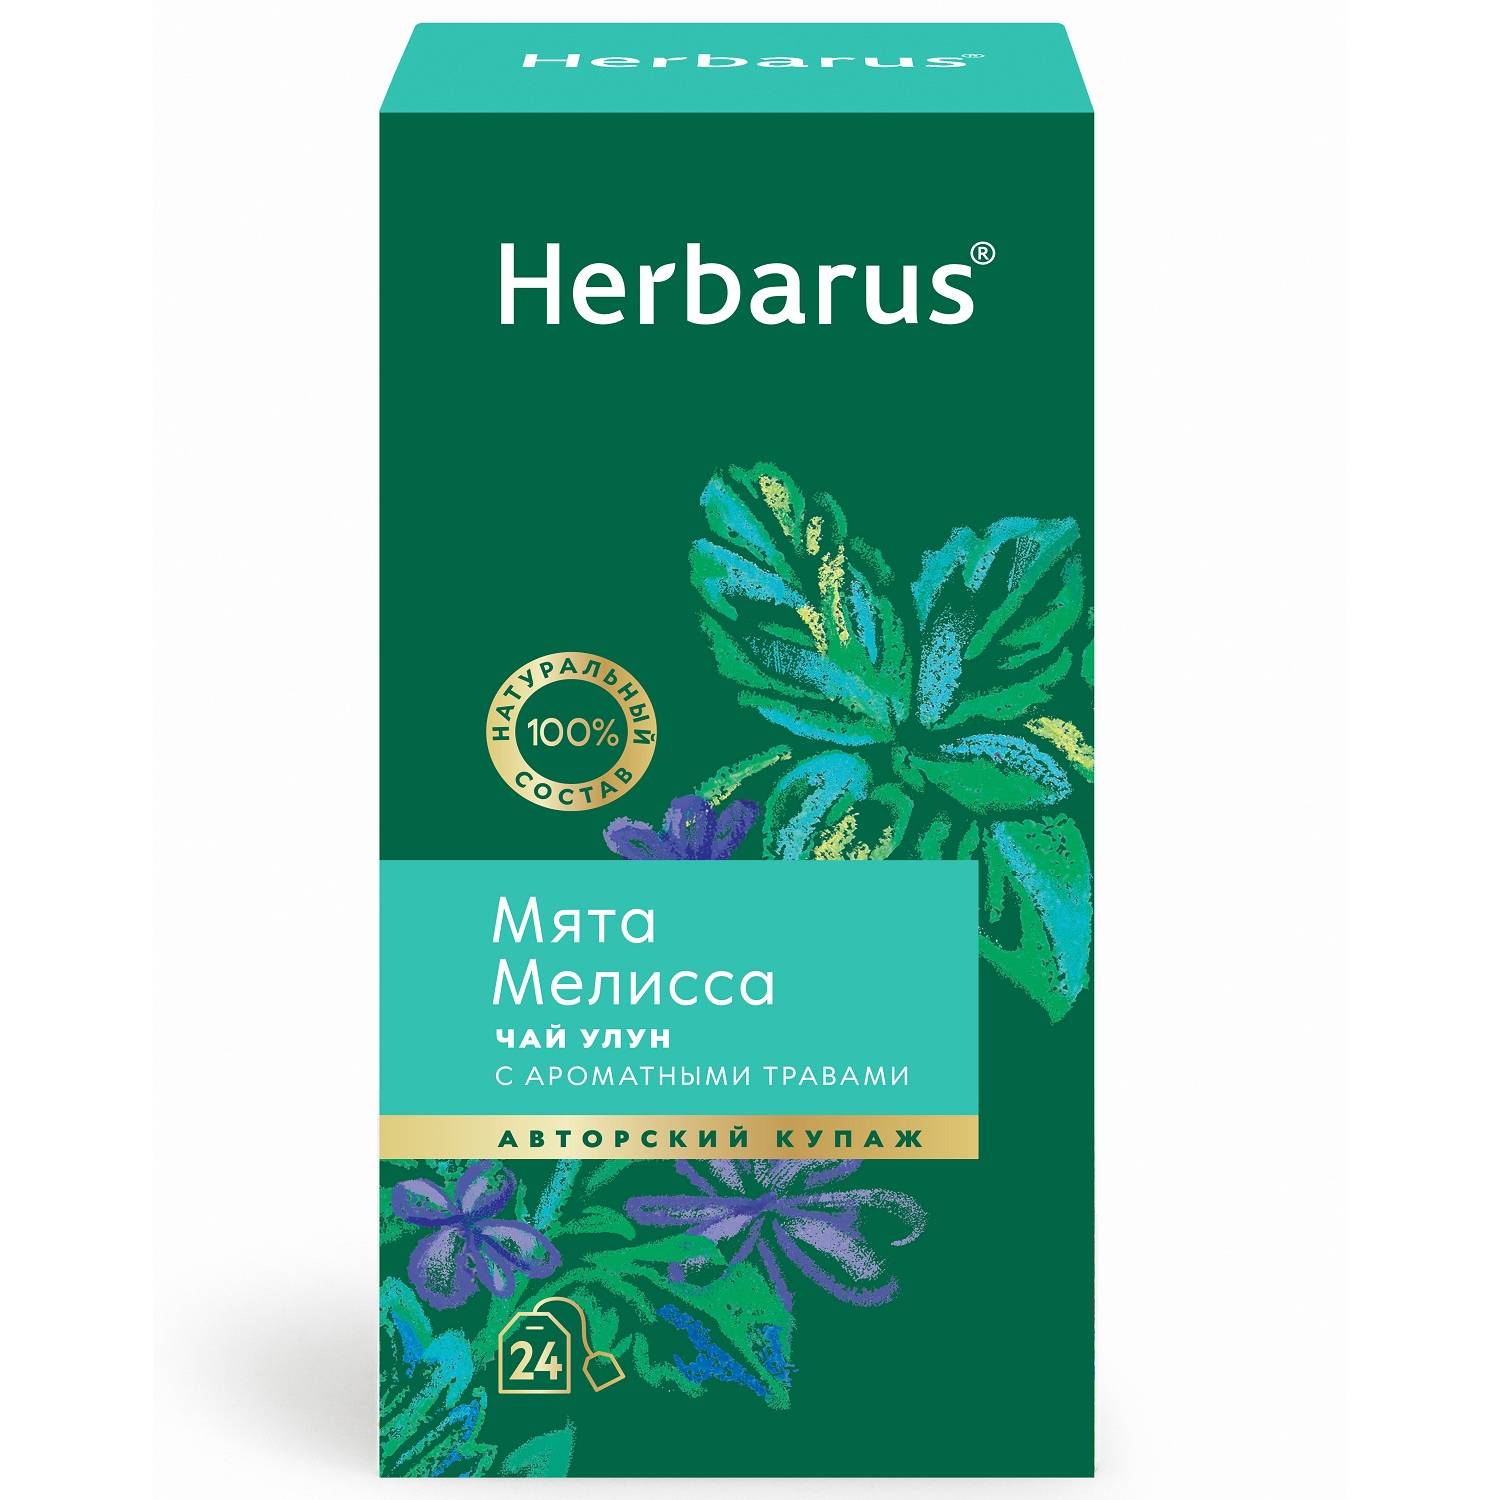 Herbarus Чай улун с ароматными травами Мята и мелисса, 24 пакетика х 2 г (Herbarus, Чай с добавками) чай с добавками ассорти чай и травы 24 х 2 г